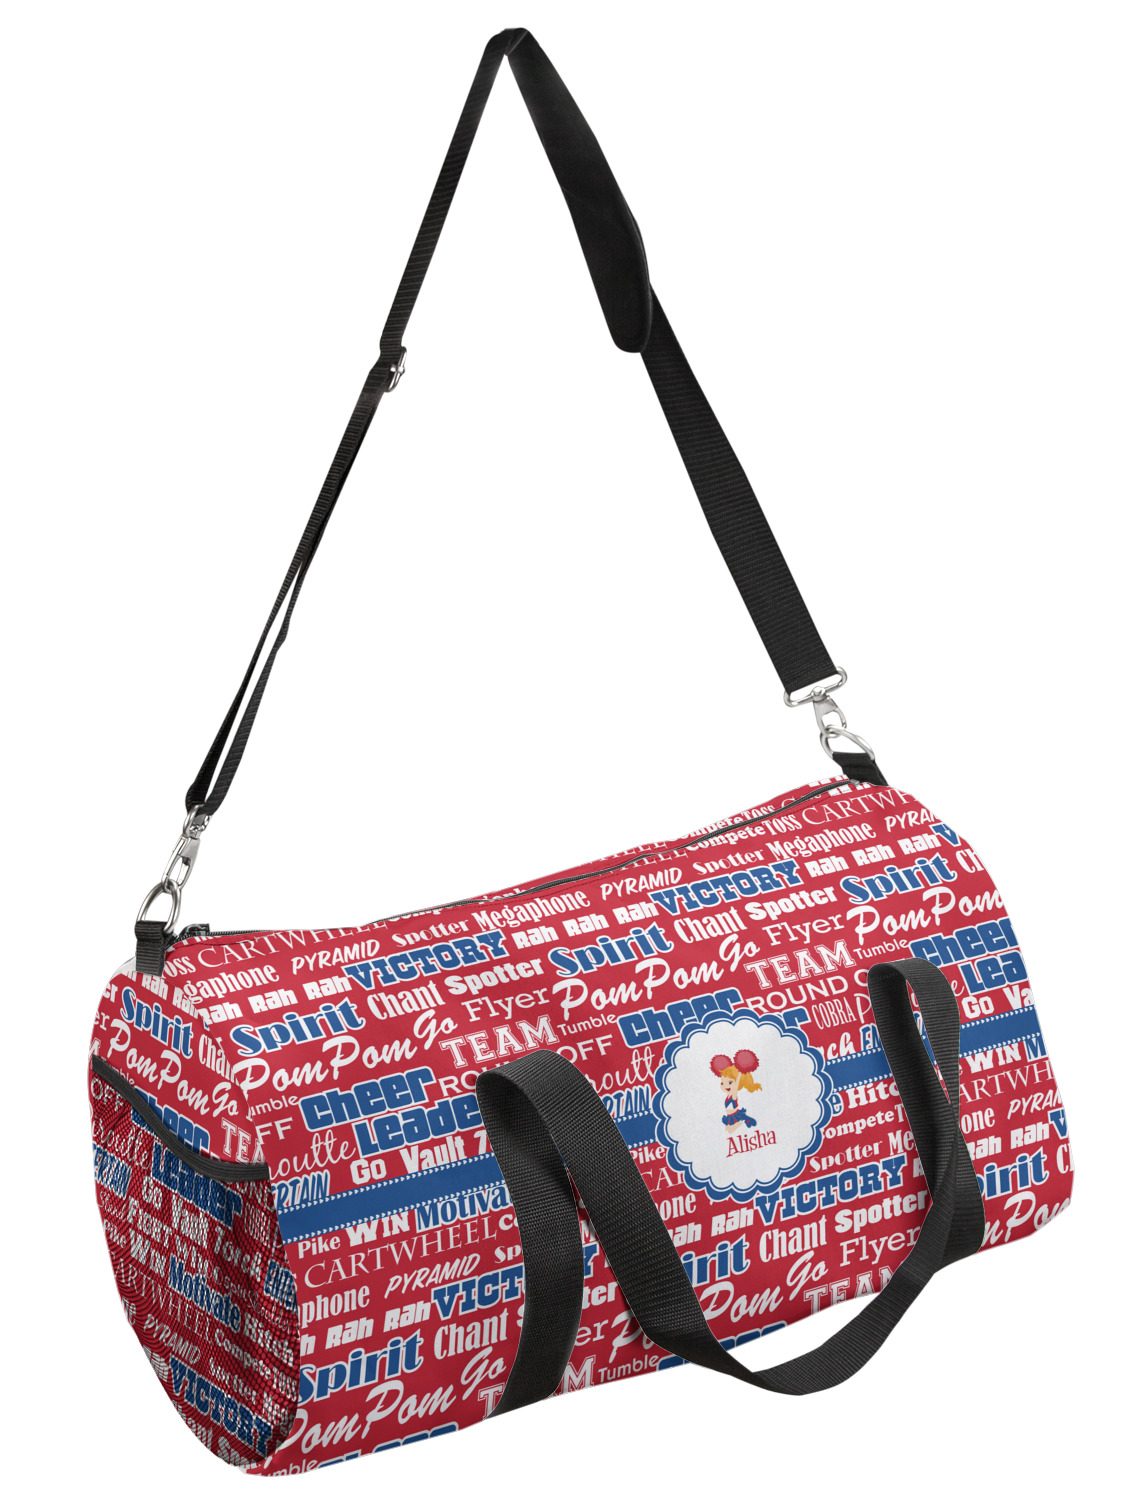 Gmhnssdszd Drawstring Backpack Bag sport bag for Hiking//Yoga//Gym//Swimming//Travel//Beach//school